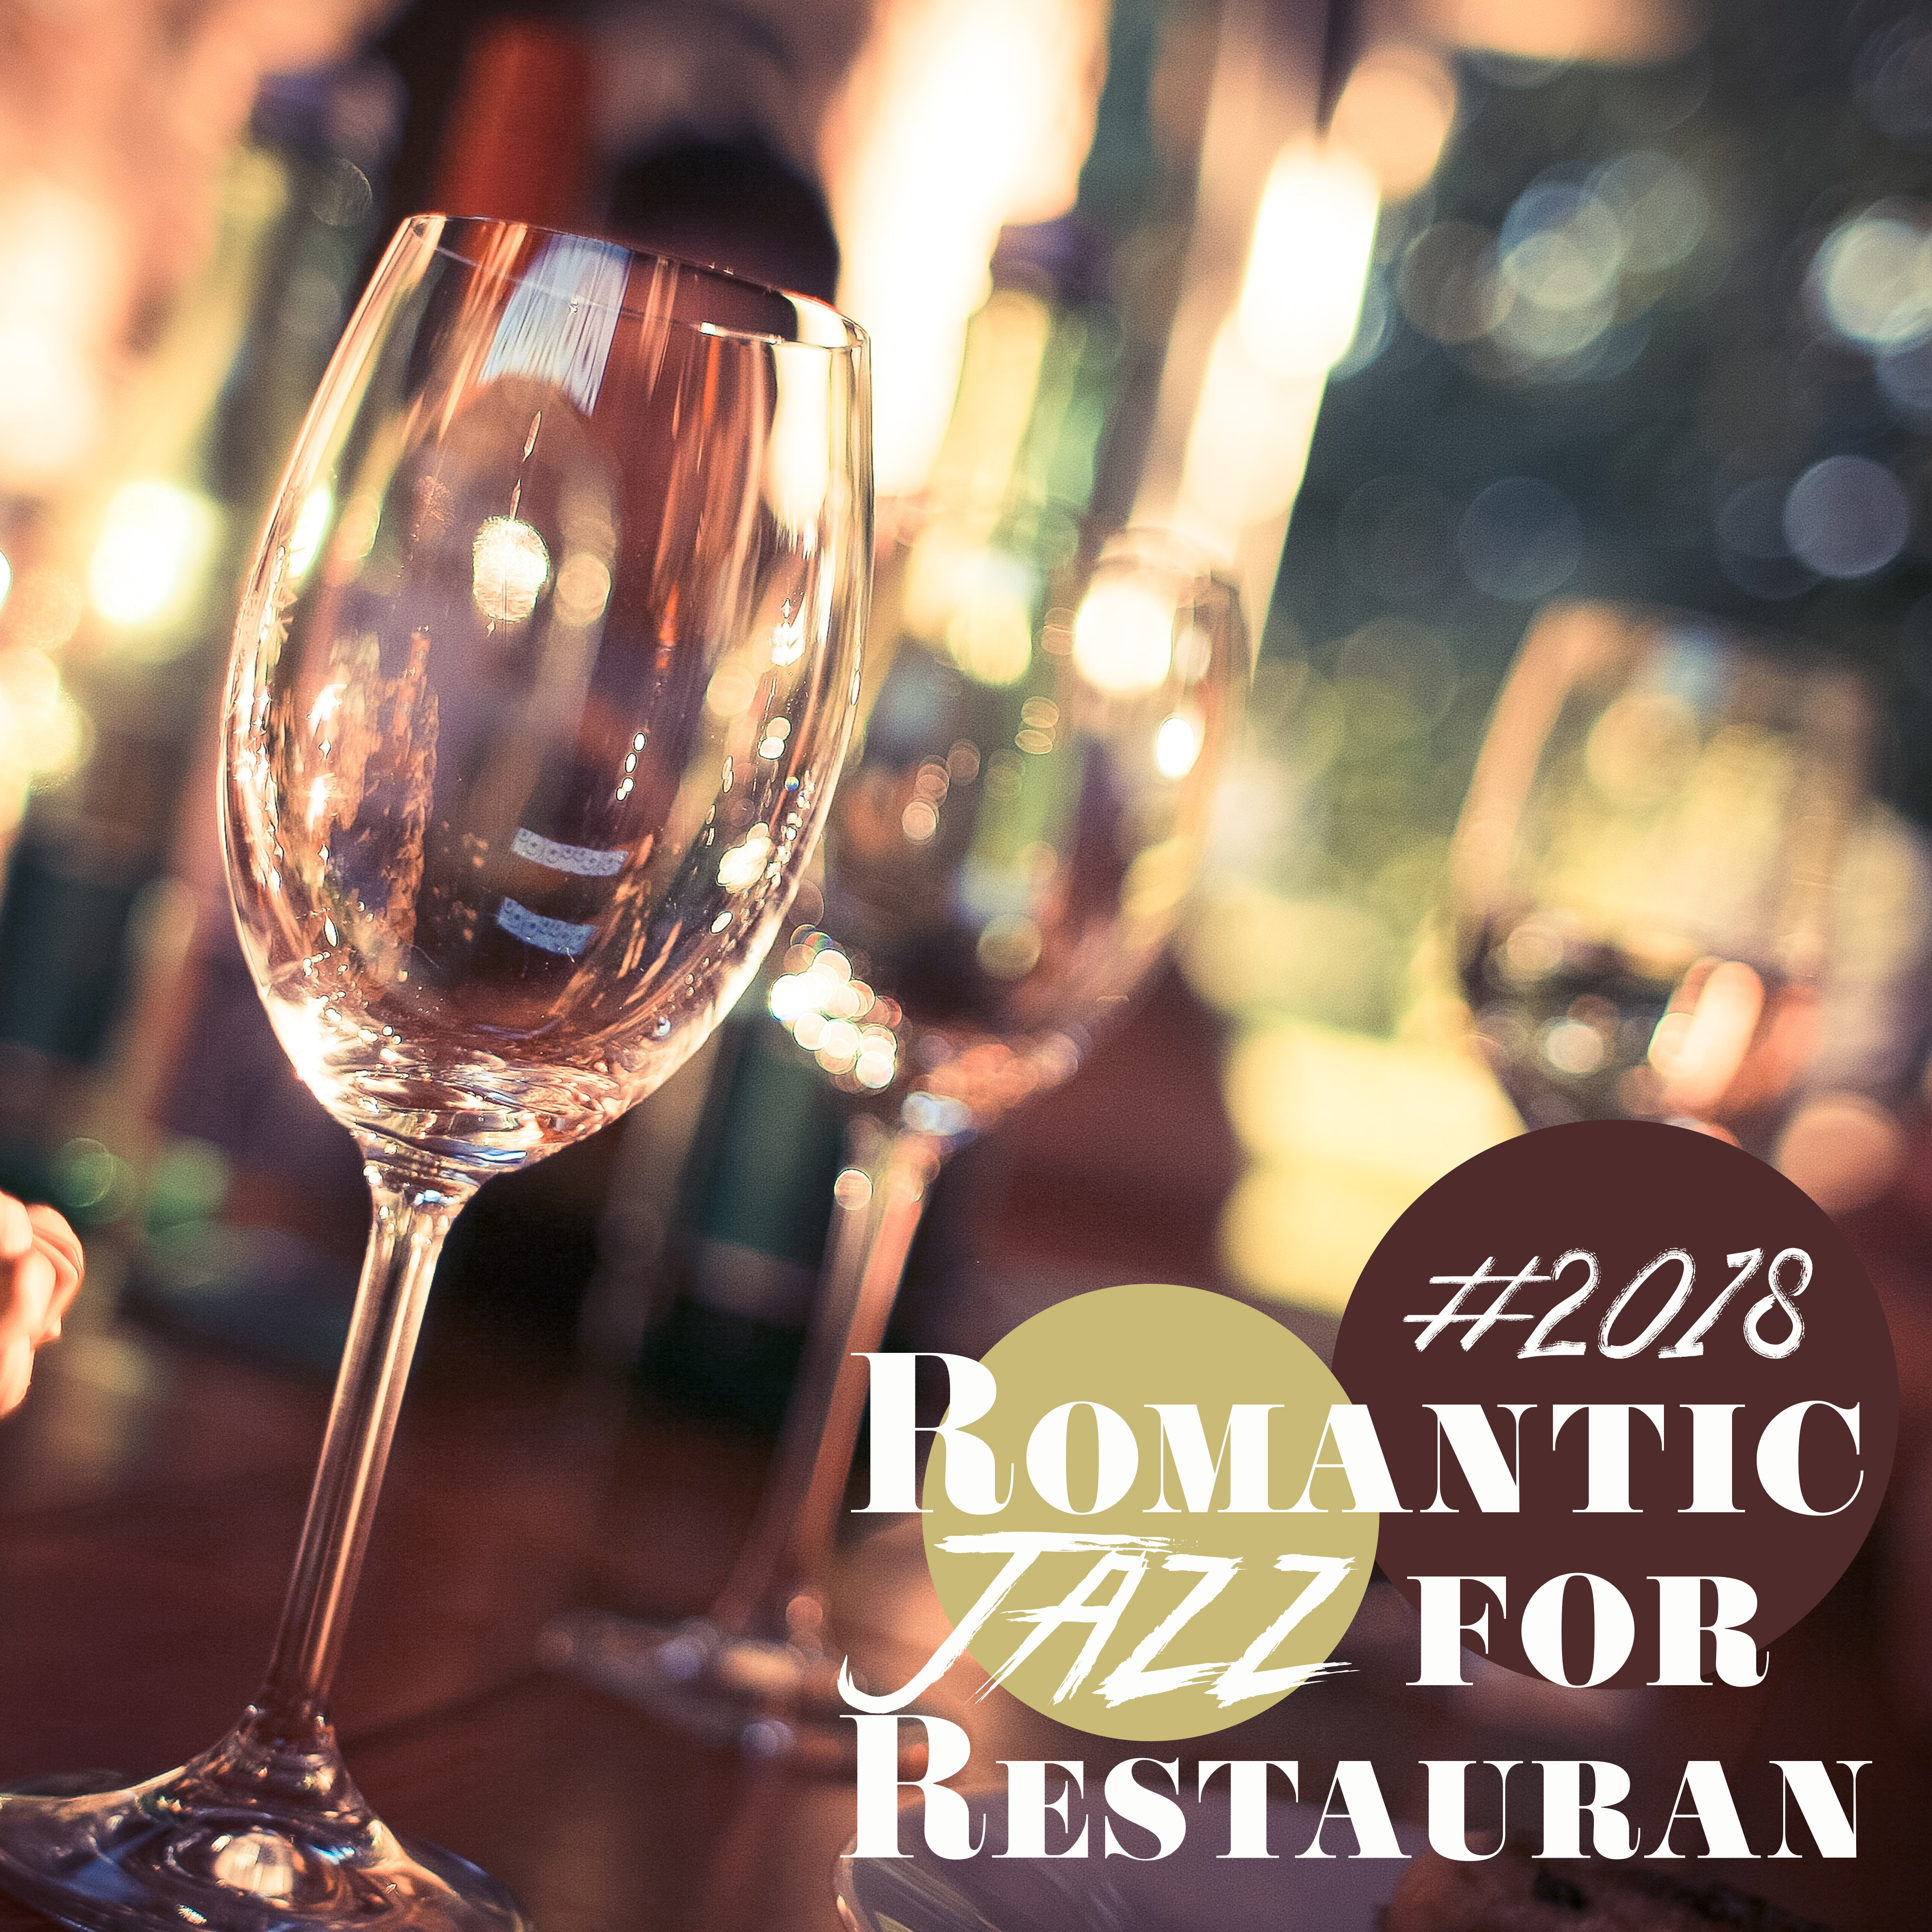 #2018 Romantic Jazz for Restaurant